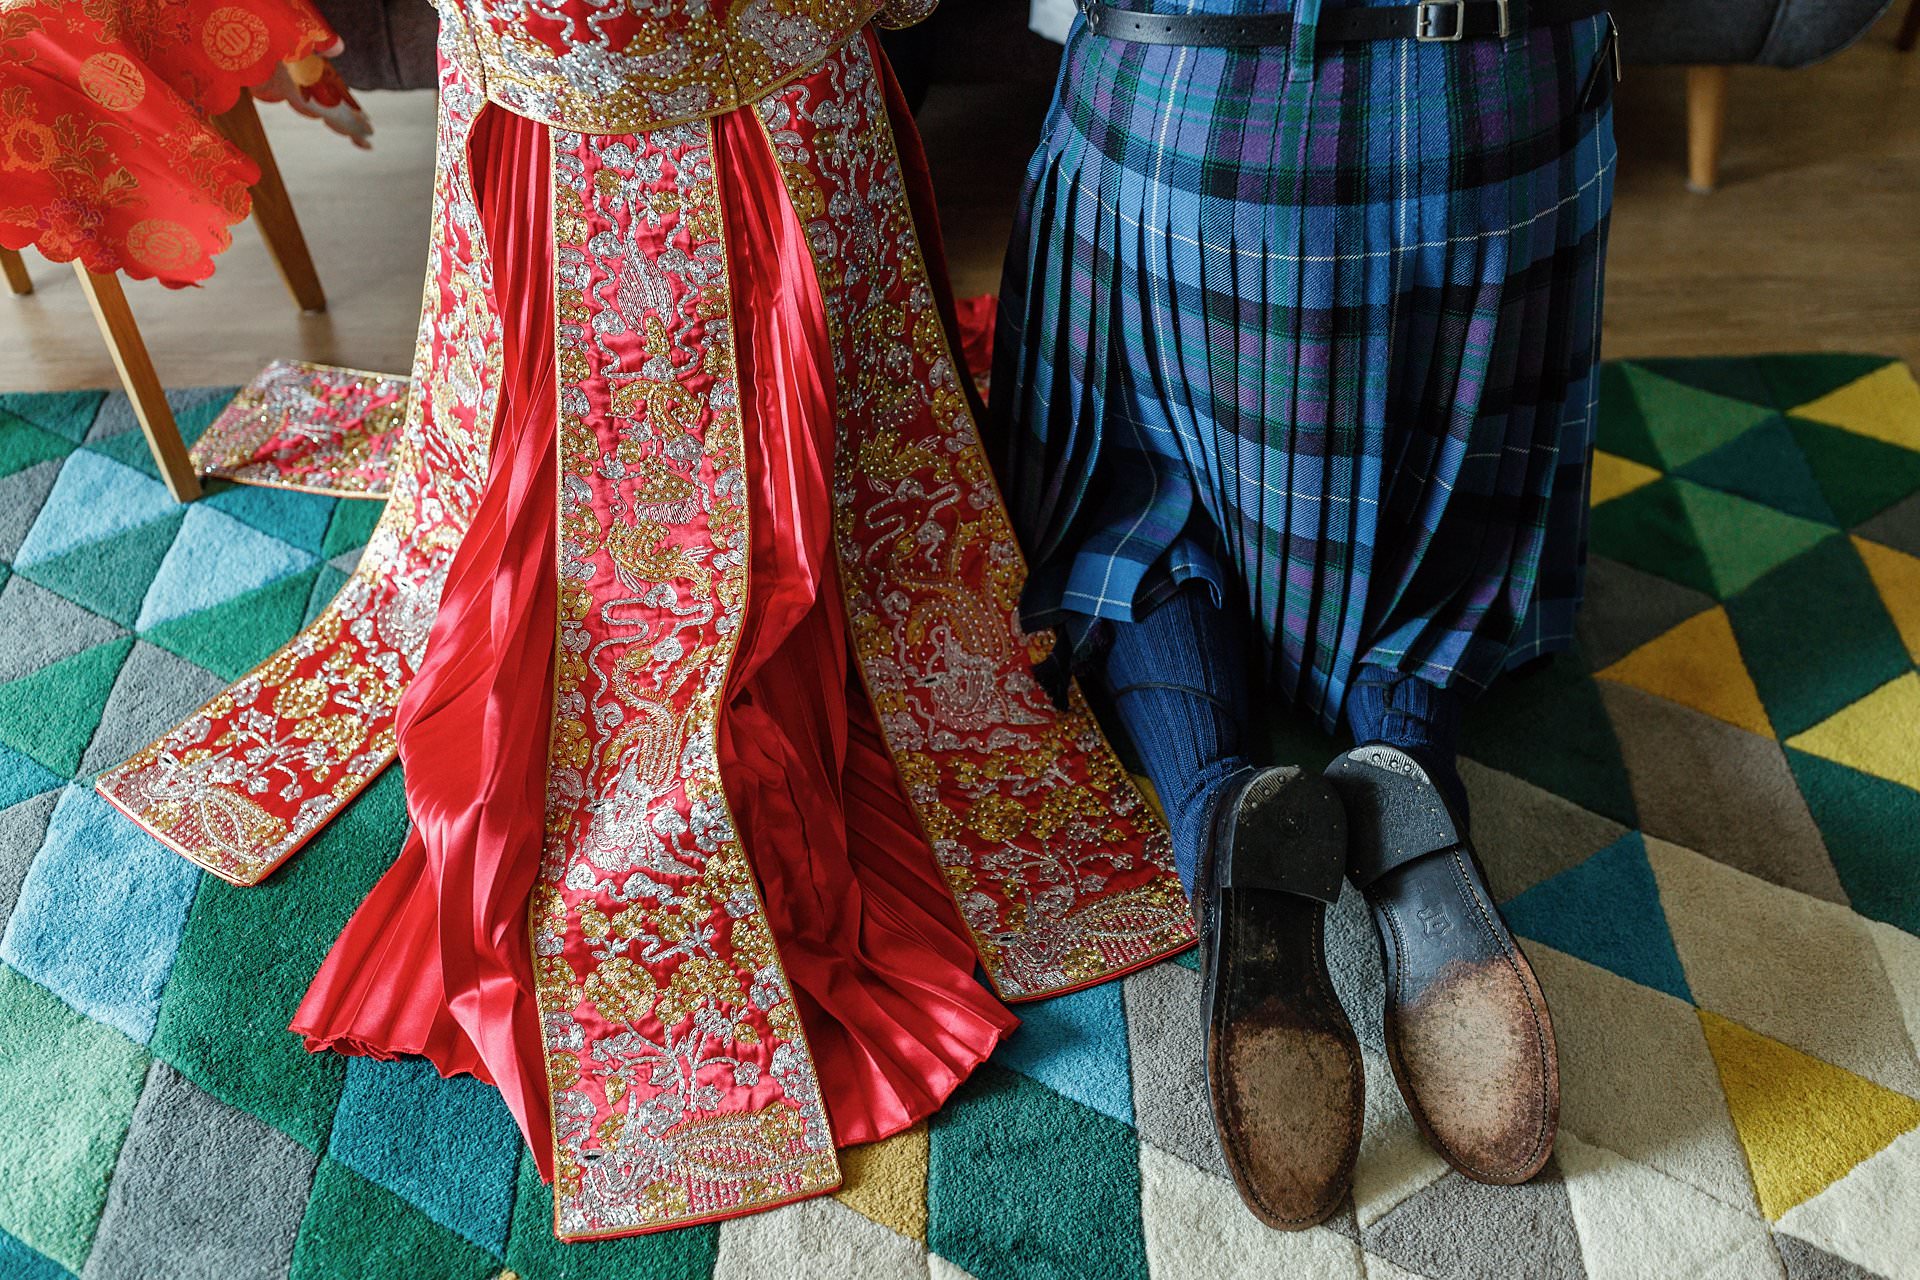 kilt wedding outfit